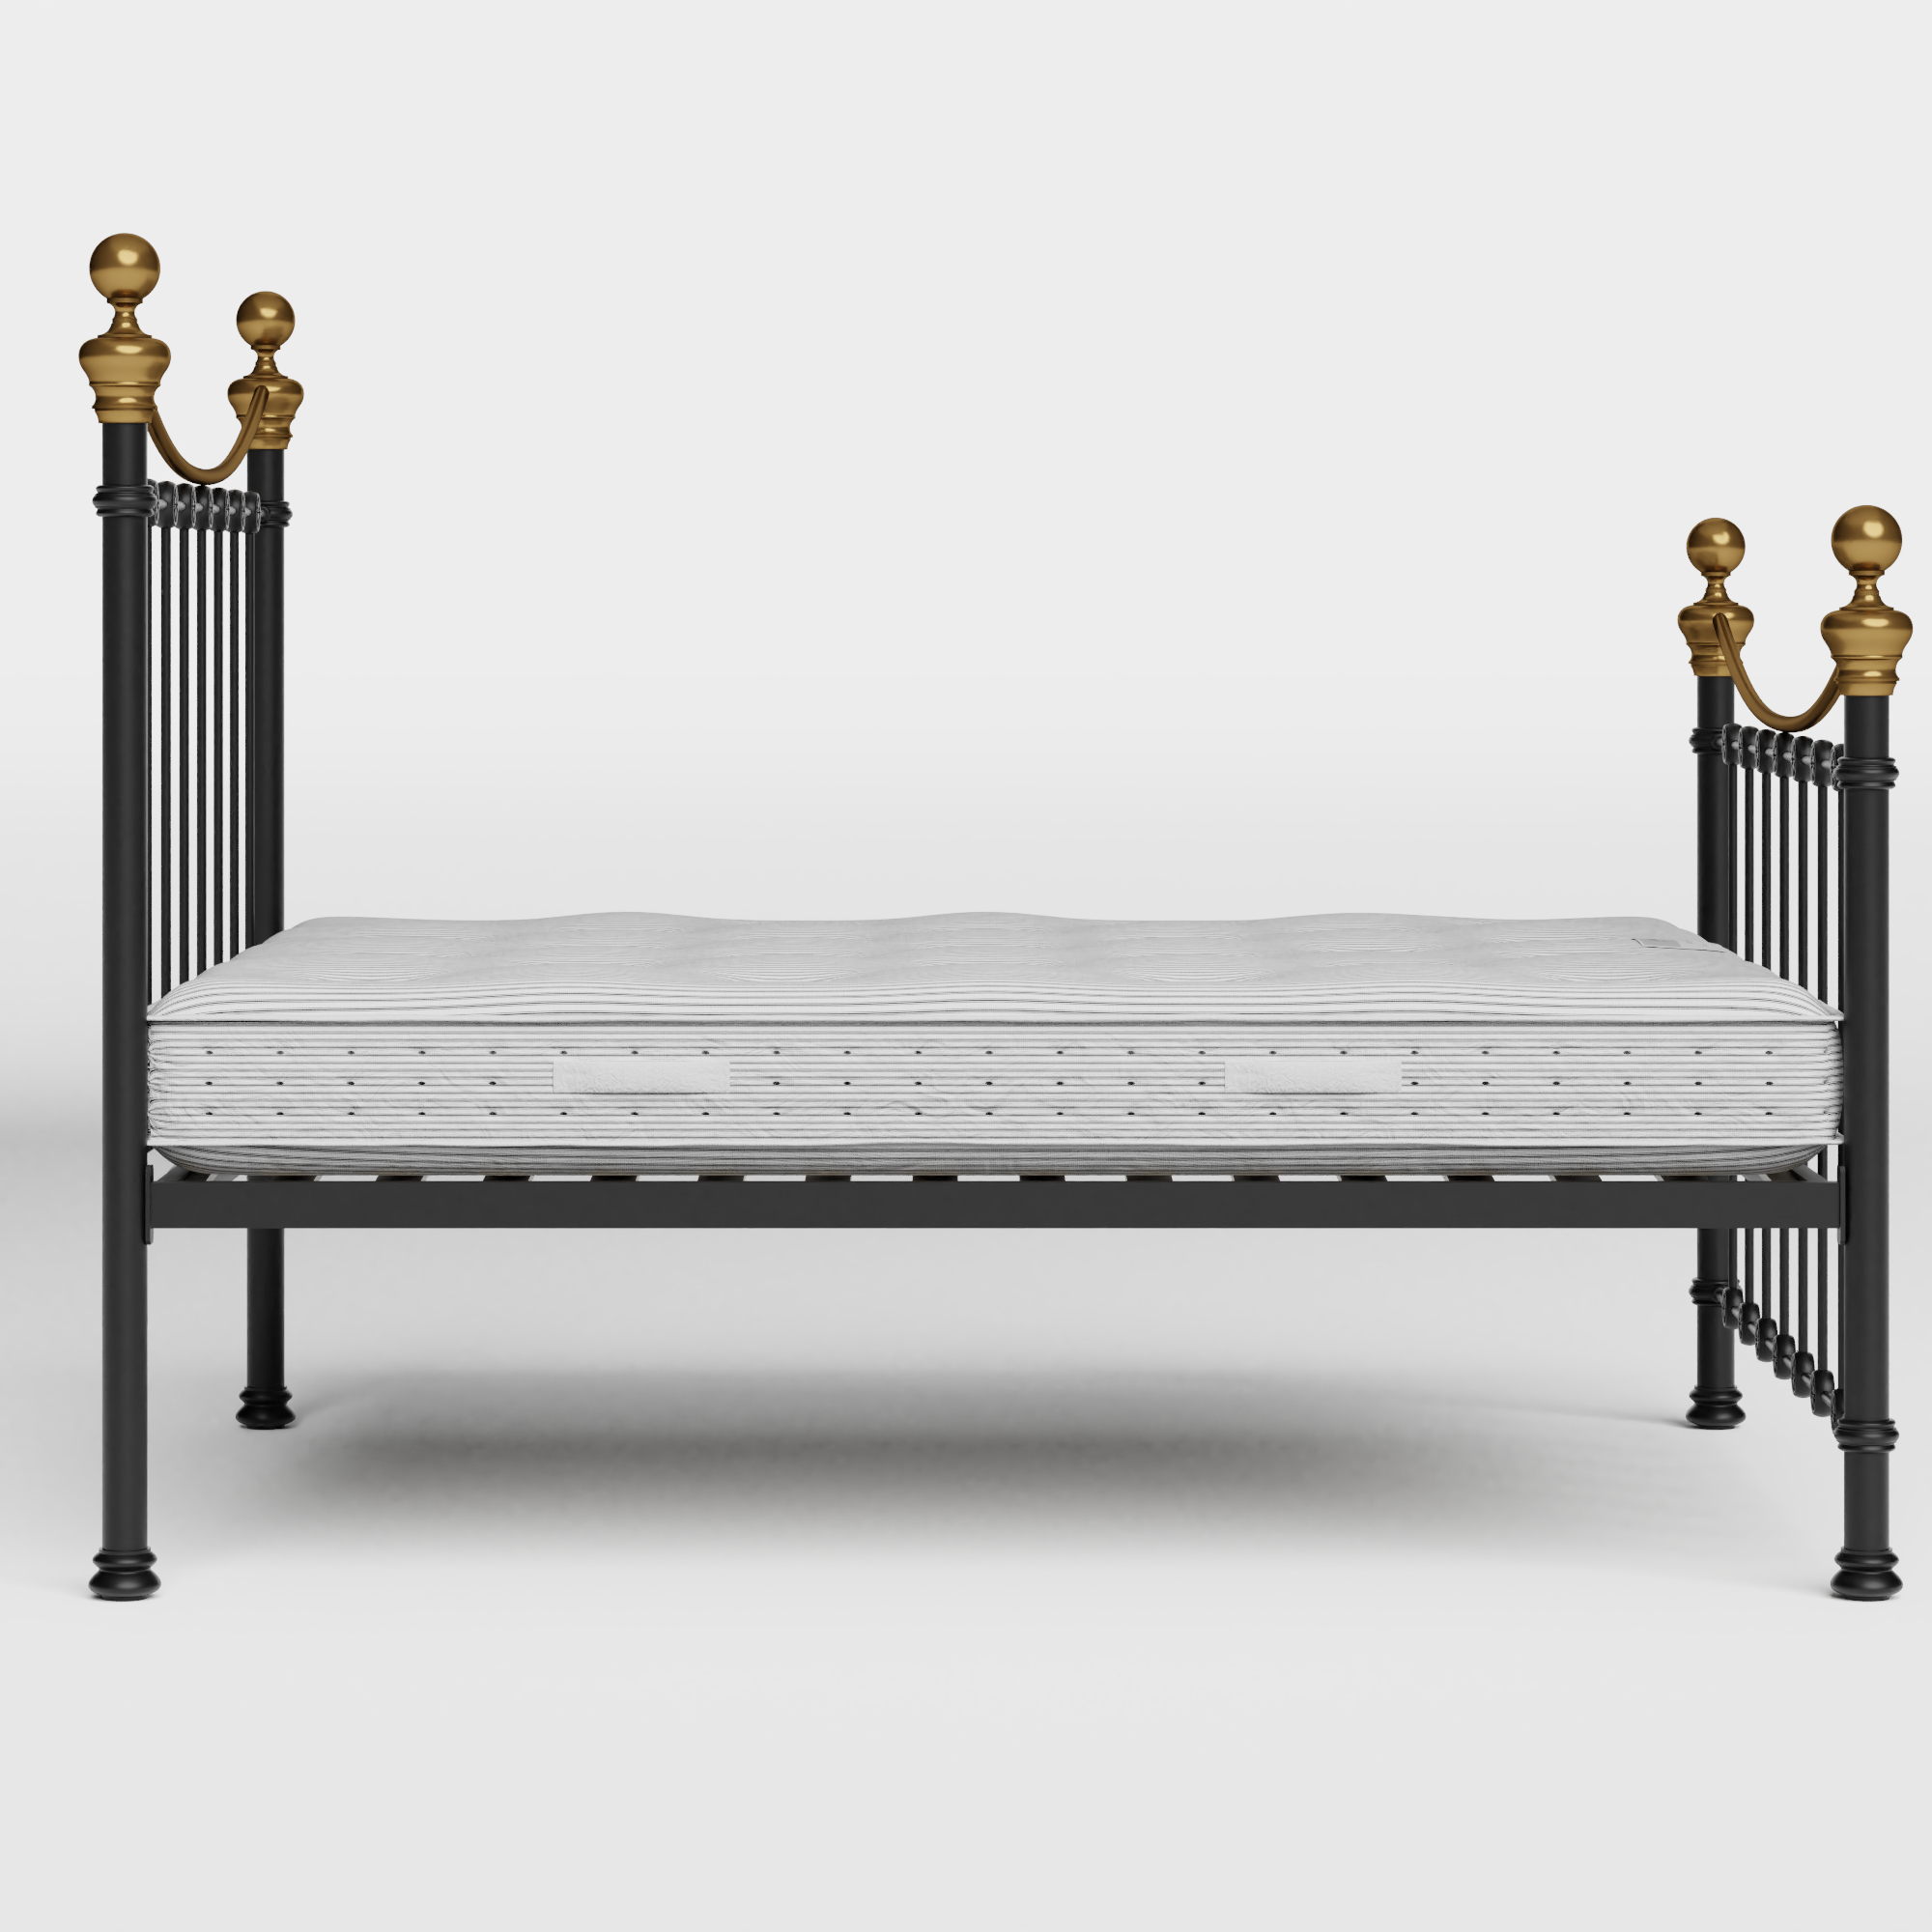 Selkirk iron/metal bed in black with Juno mattress